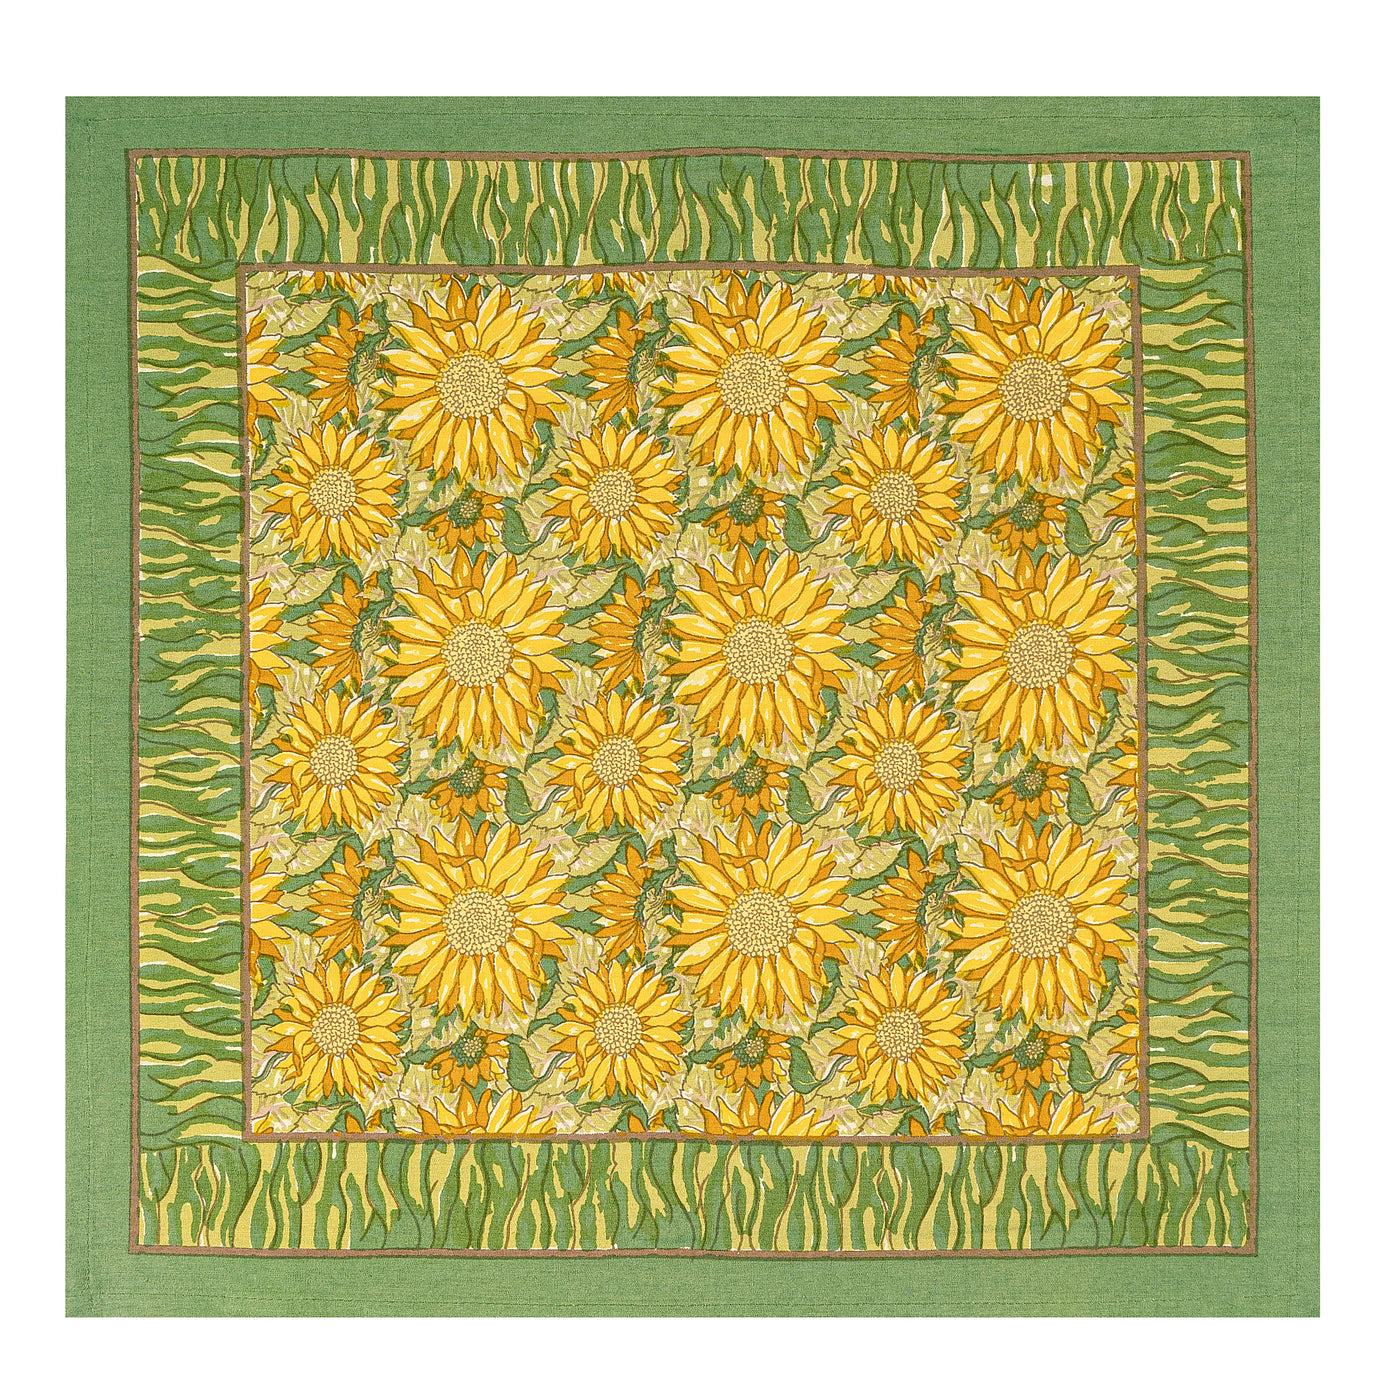 Sunflower Napkins Yellow & Green, Set of 6